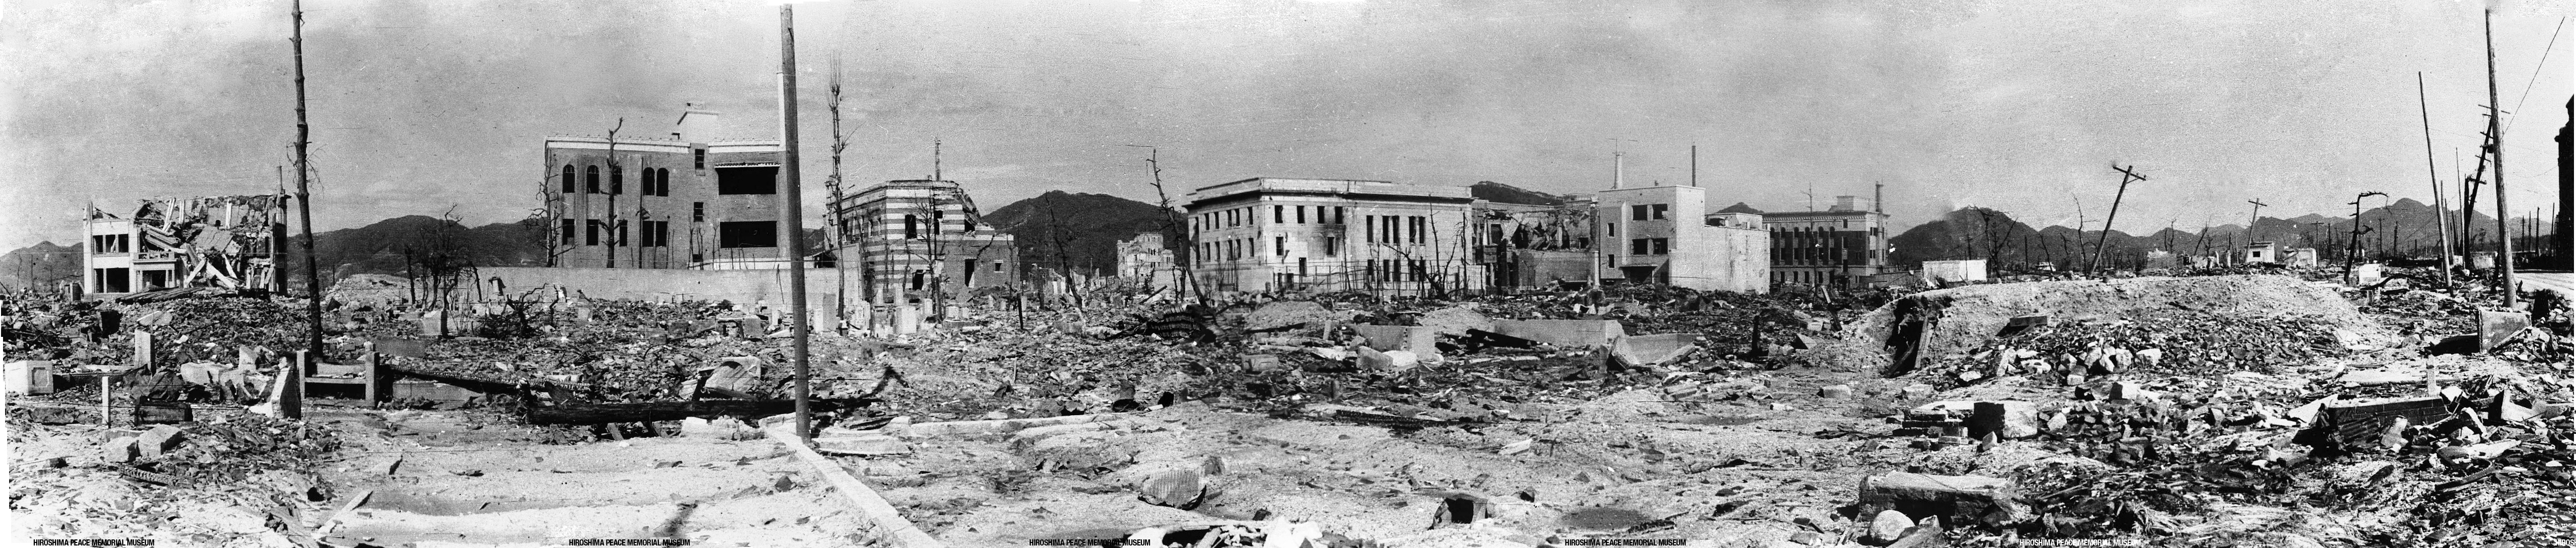 Hiroshima Panorama